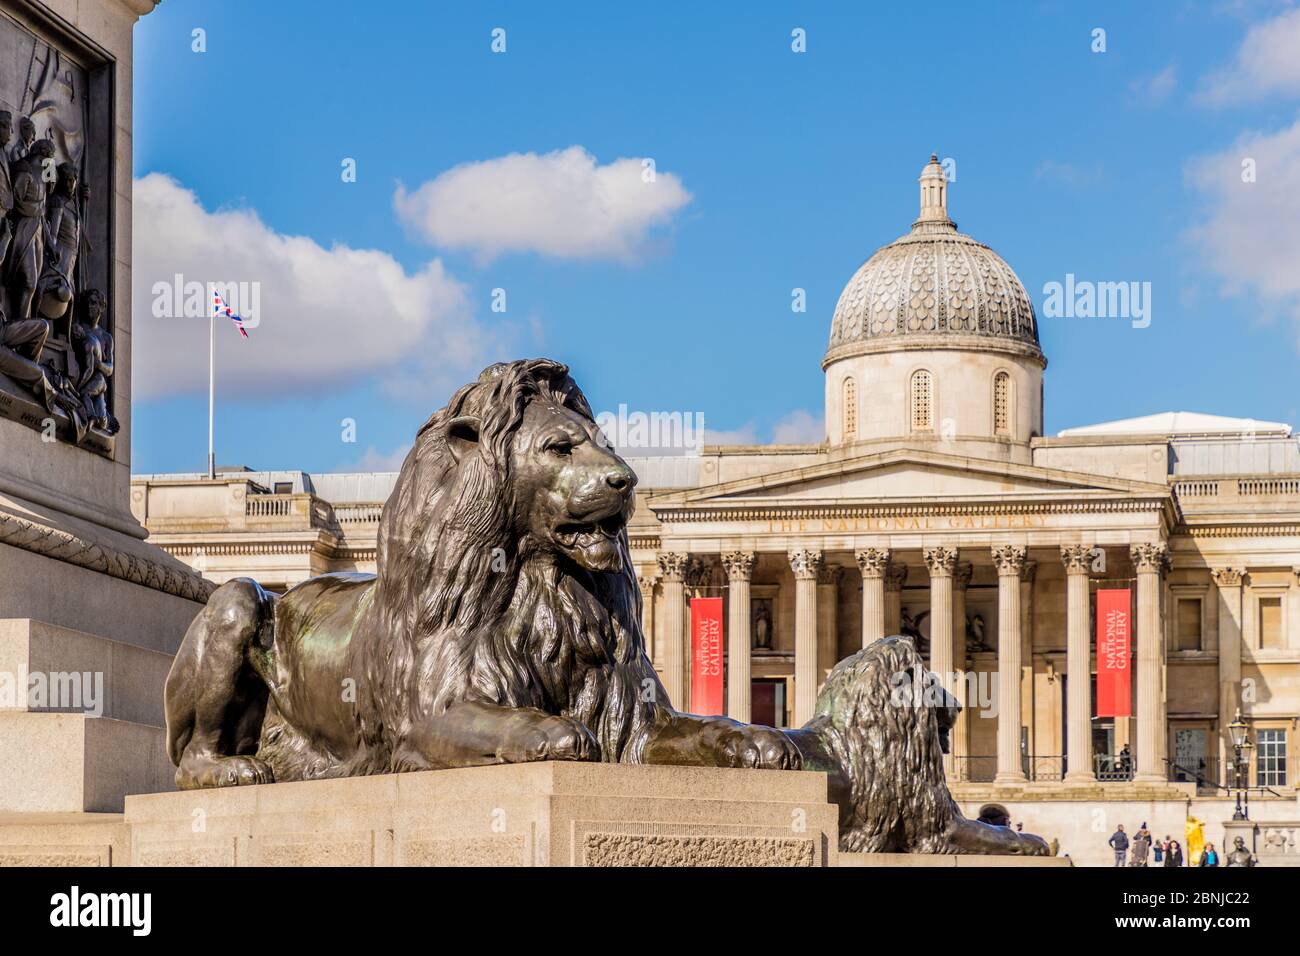 Trafalgar Square Lions and the National Gallery, Trafalgar Square, London, England, United Kingdom, Europe Stock Photo